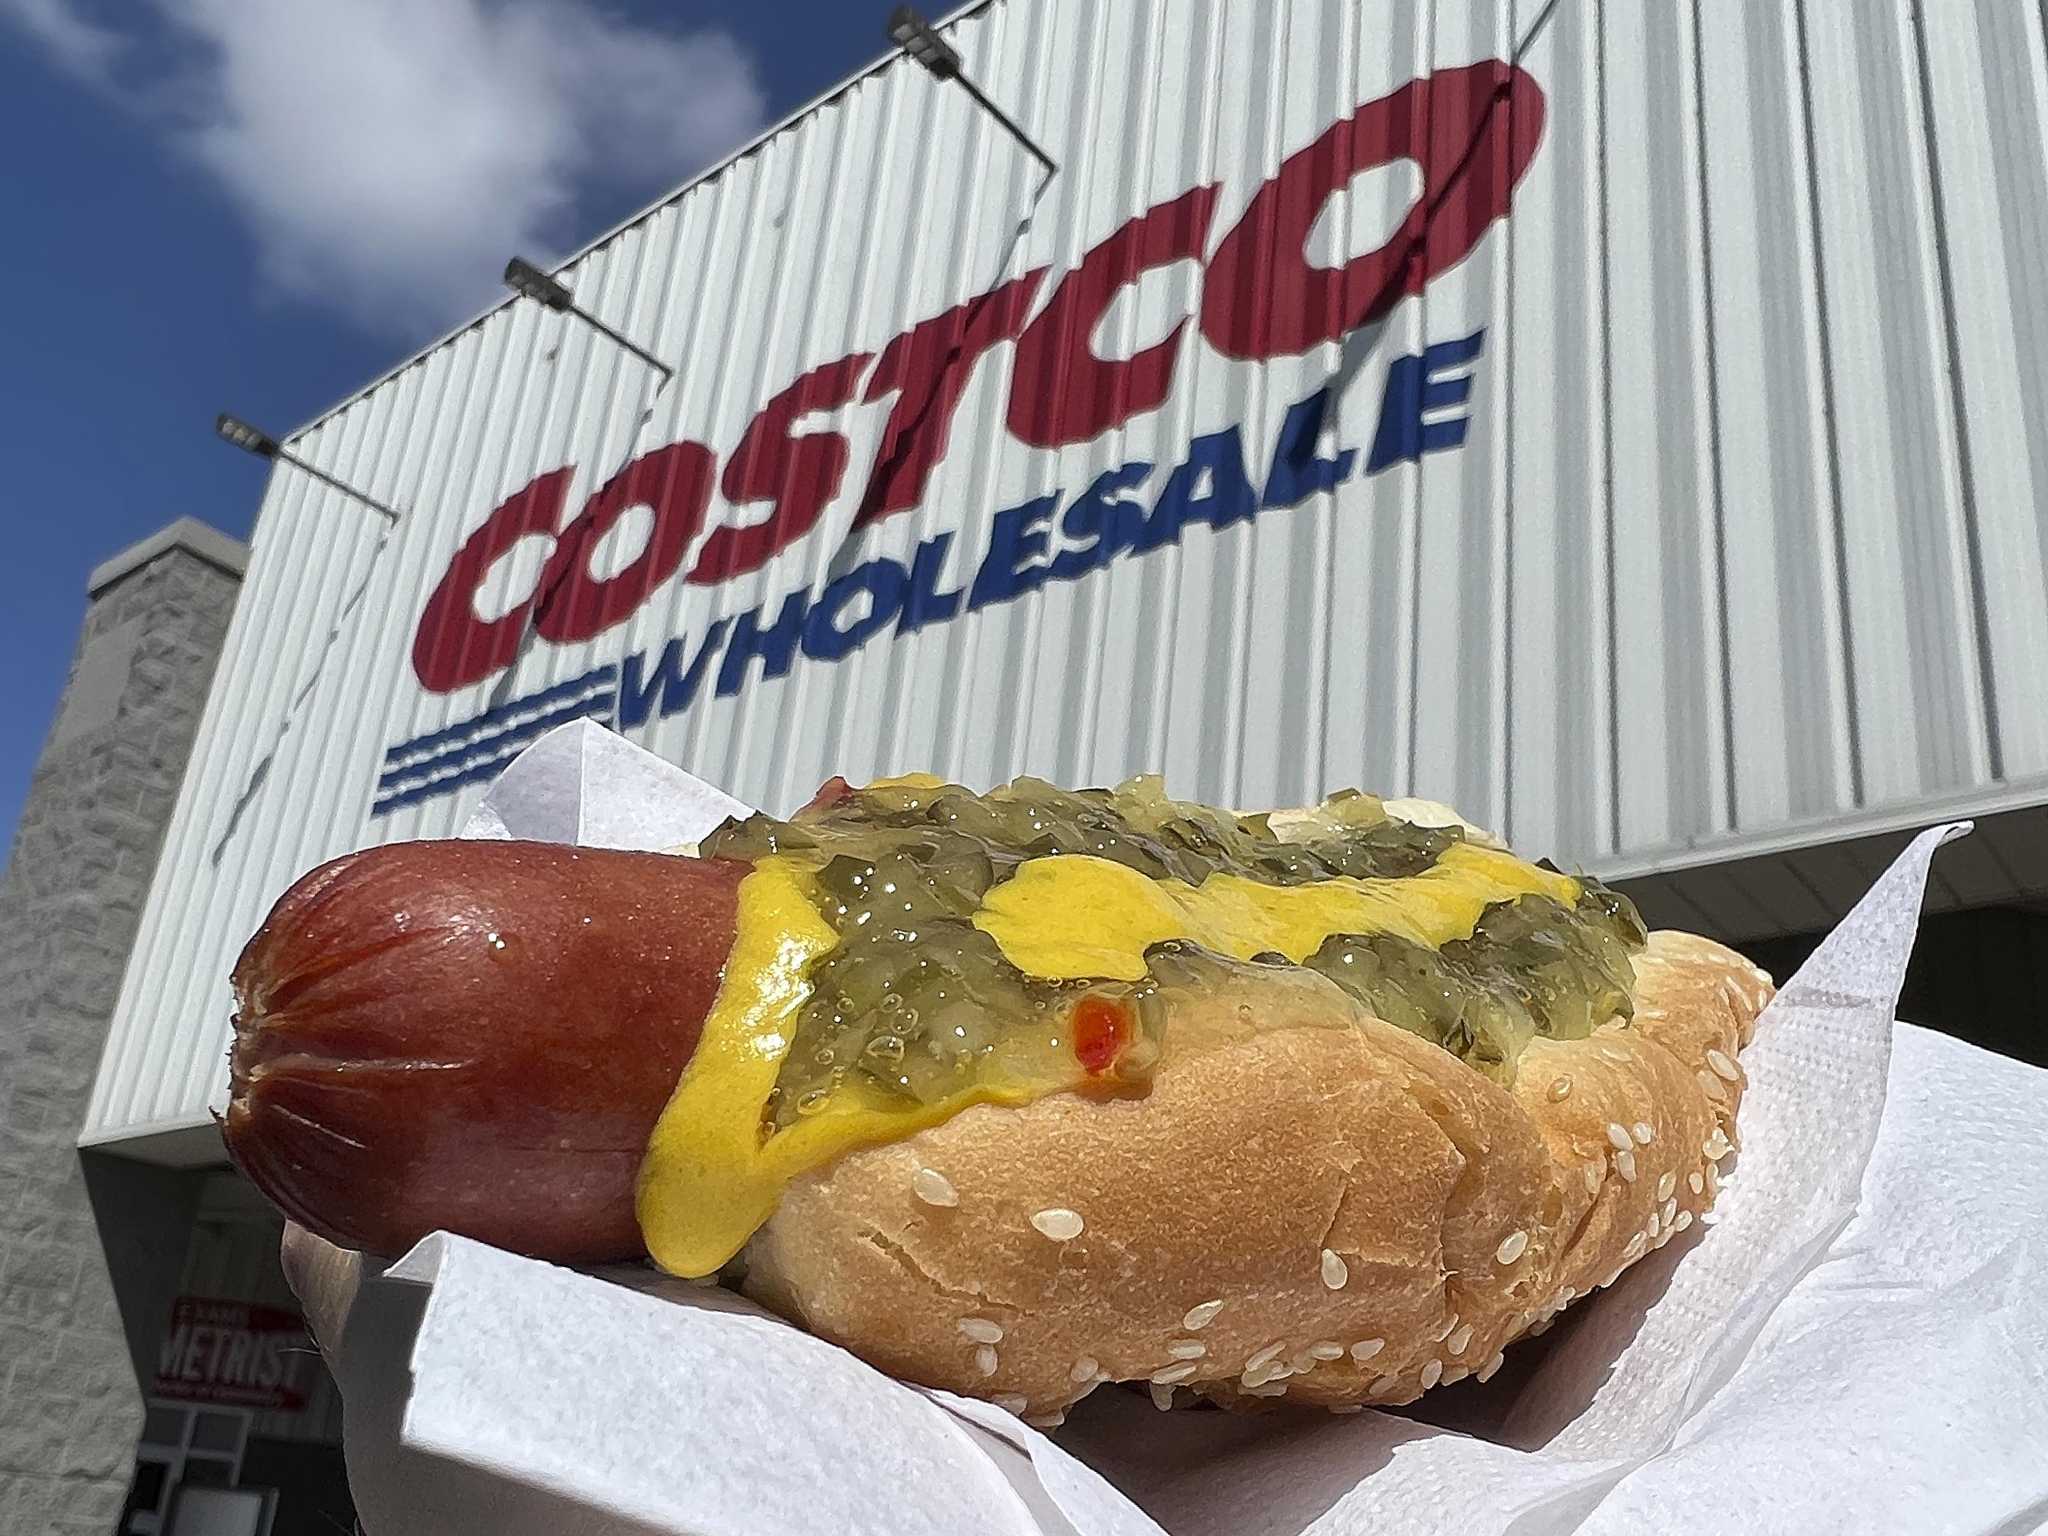 Sam's Club undercuts Costco's $1.50 hot dog combo by 12 cents